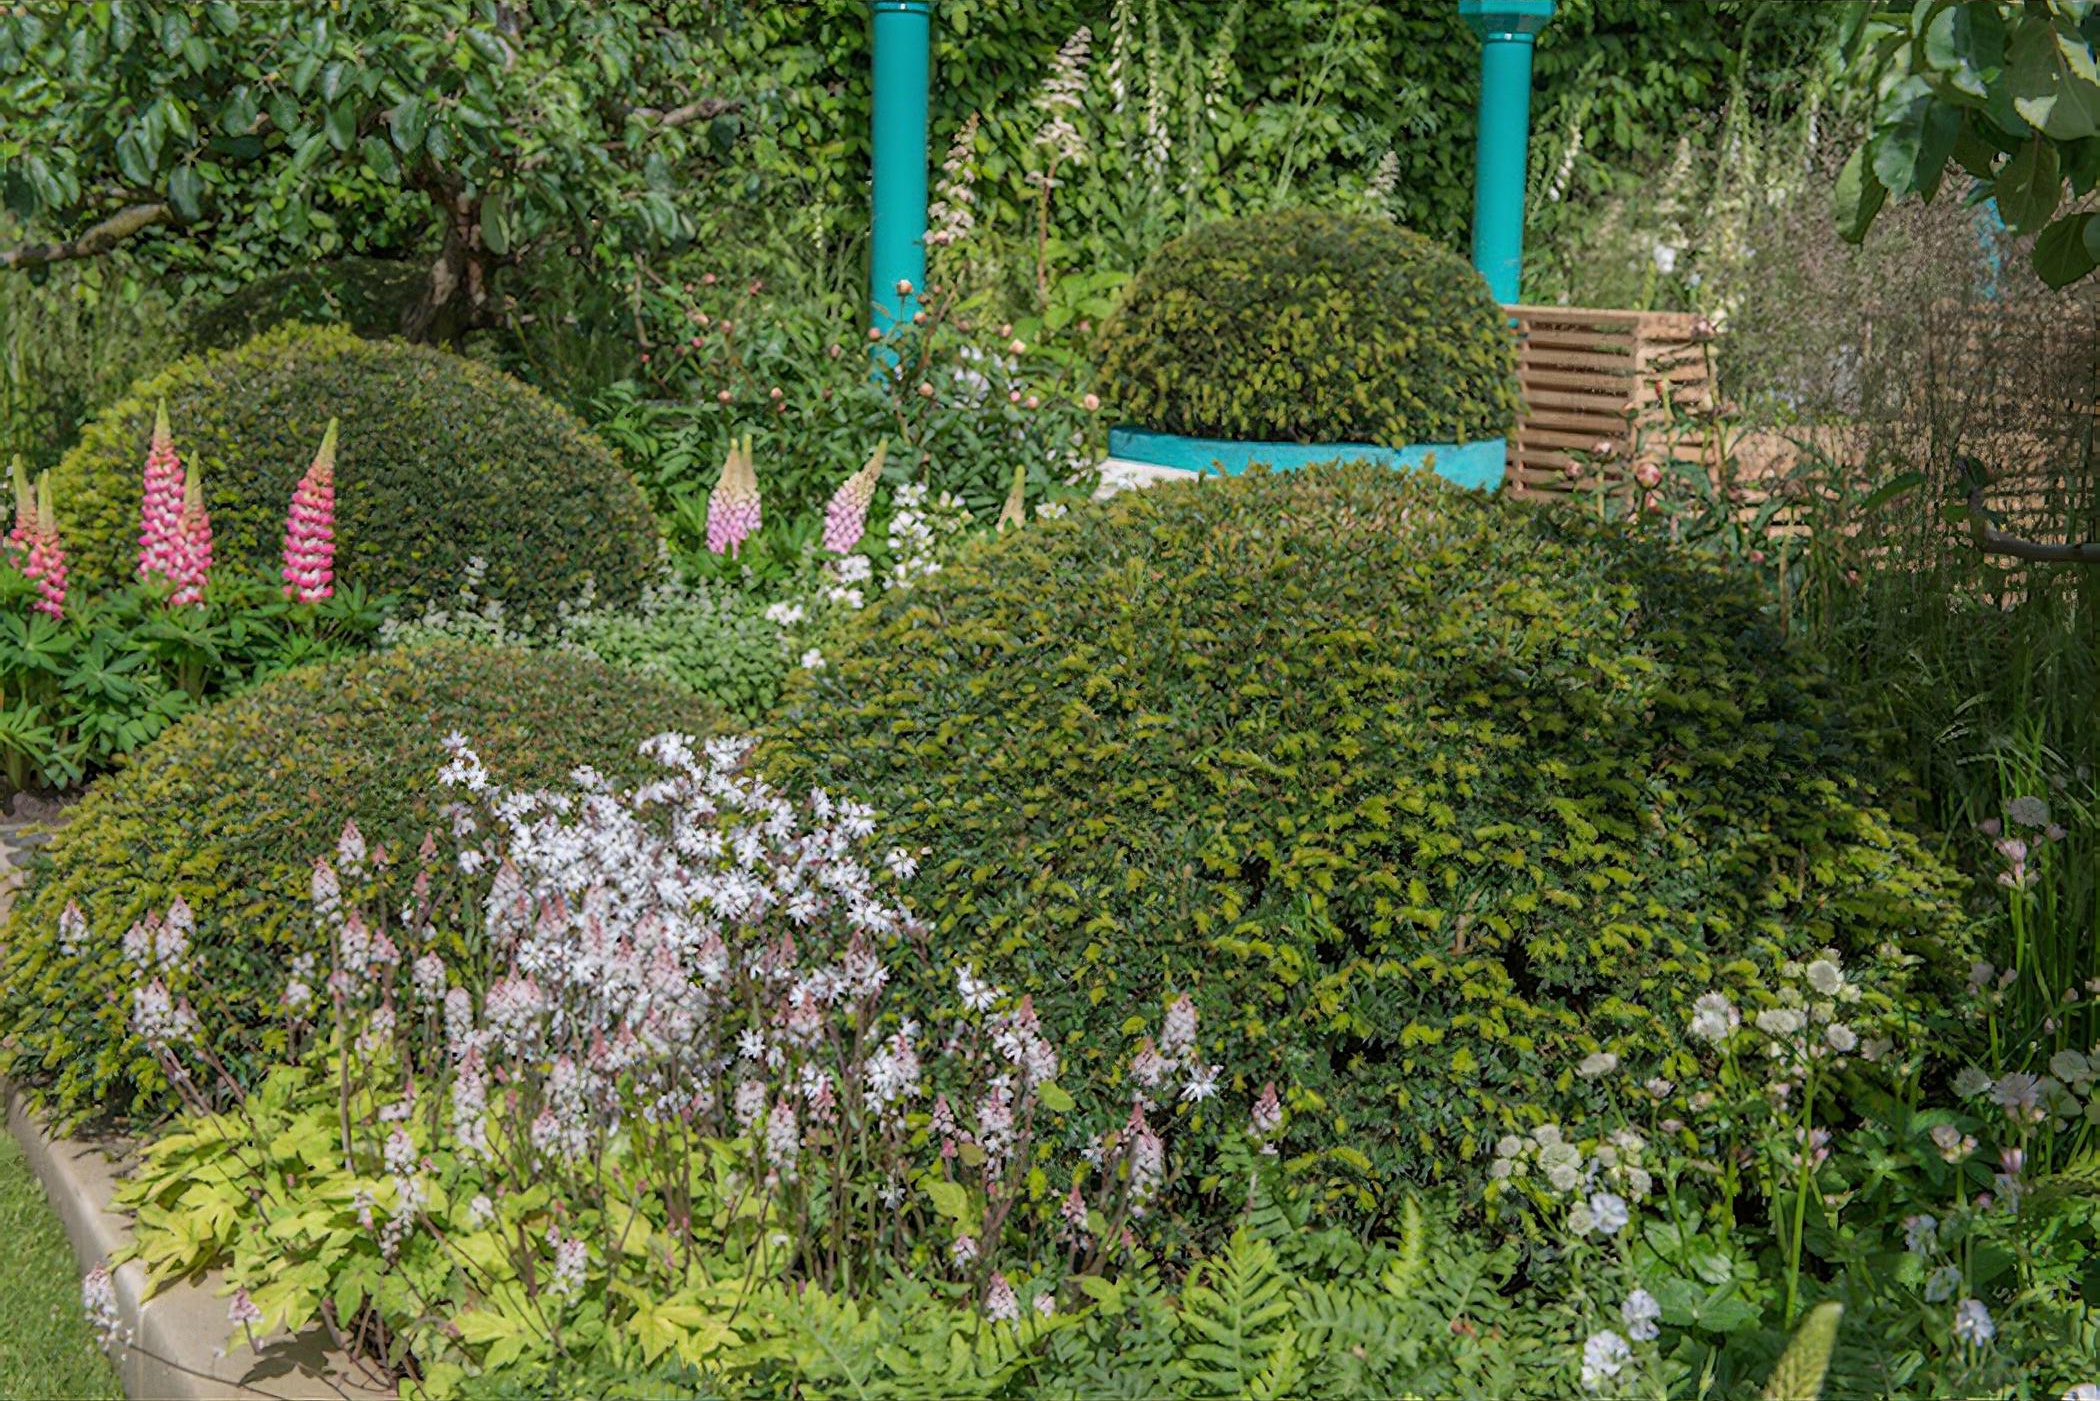 500 years of Covent Garden Designed By garden designer Lee Bestall